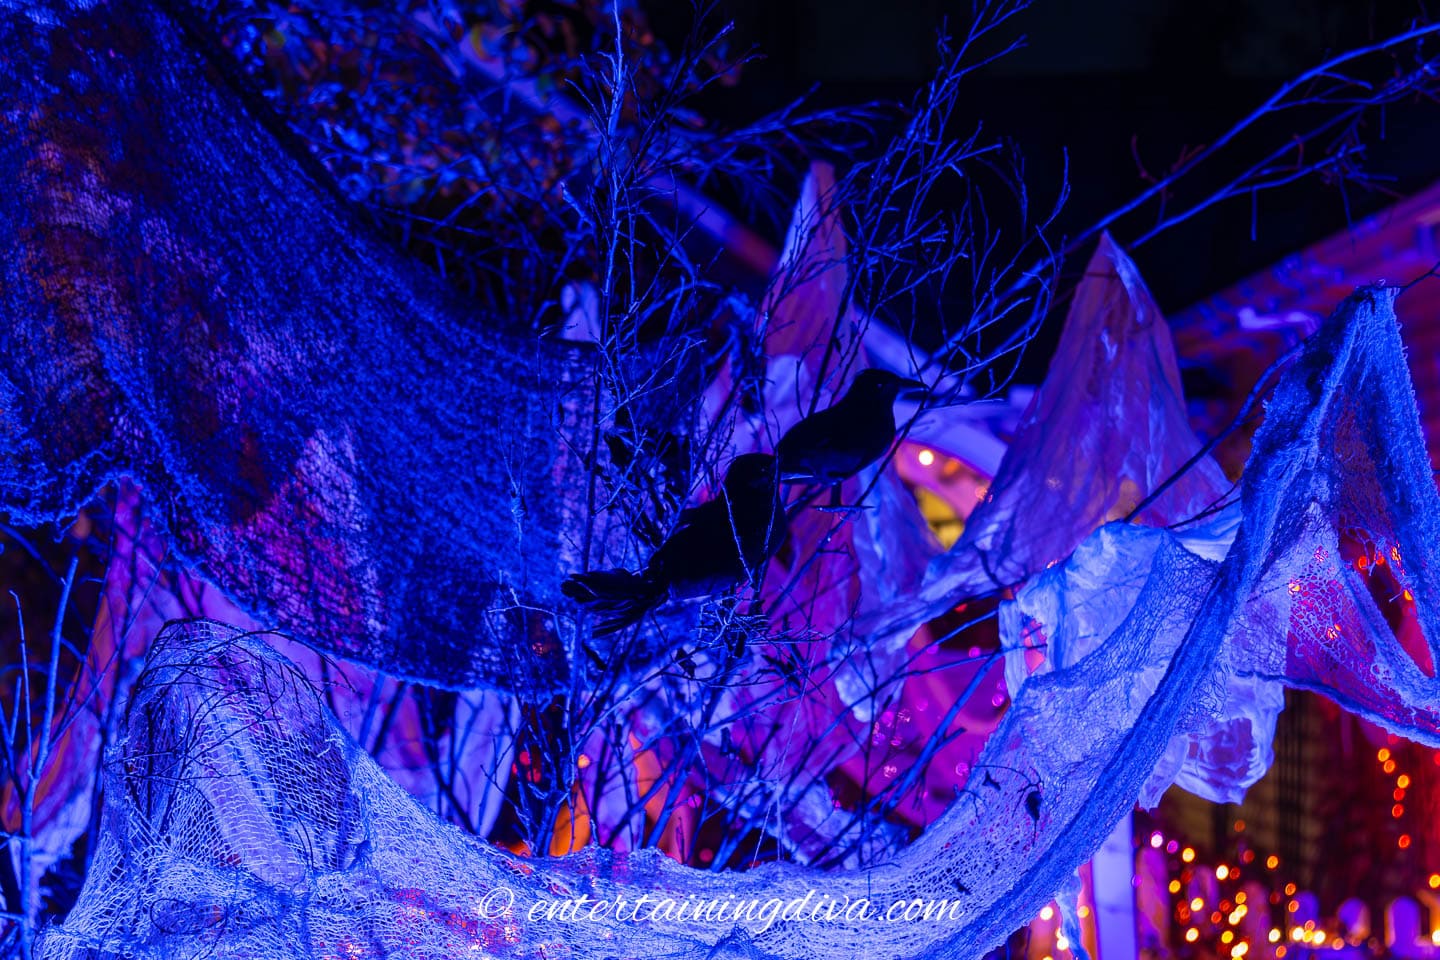 Spooky outdoor Halloween decor created with crows, creepy cloth and a blue spotlight